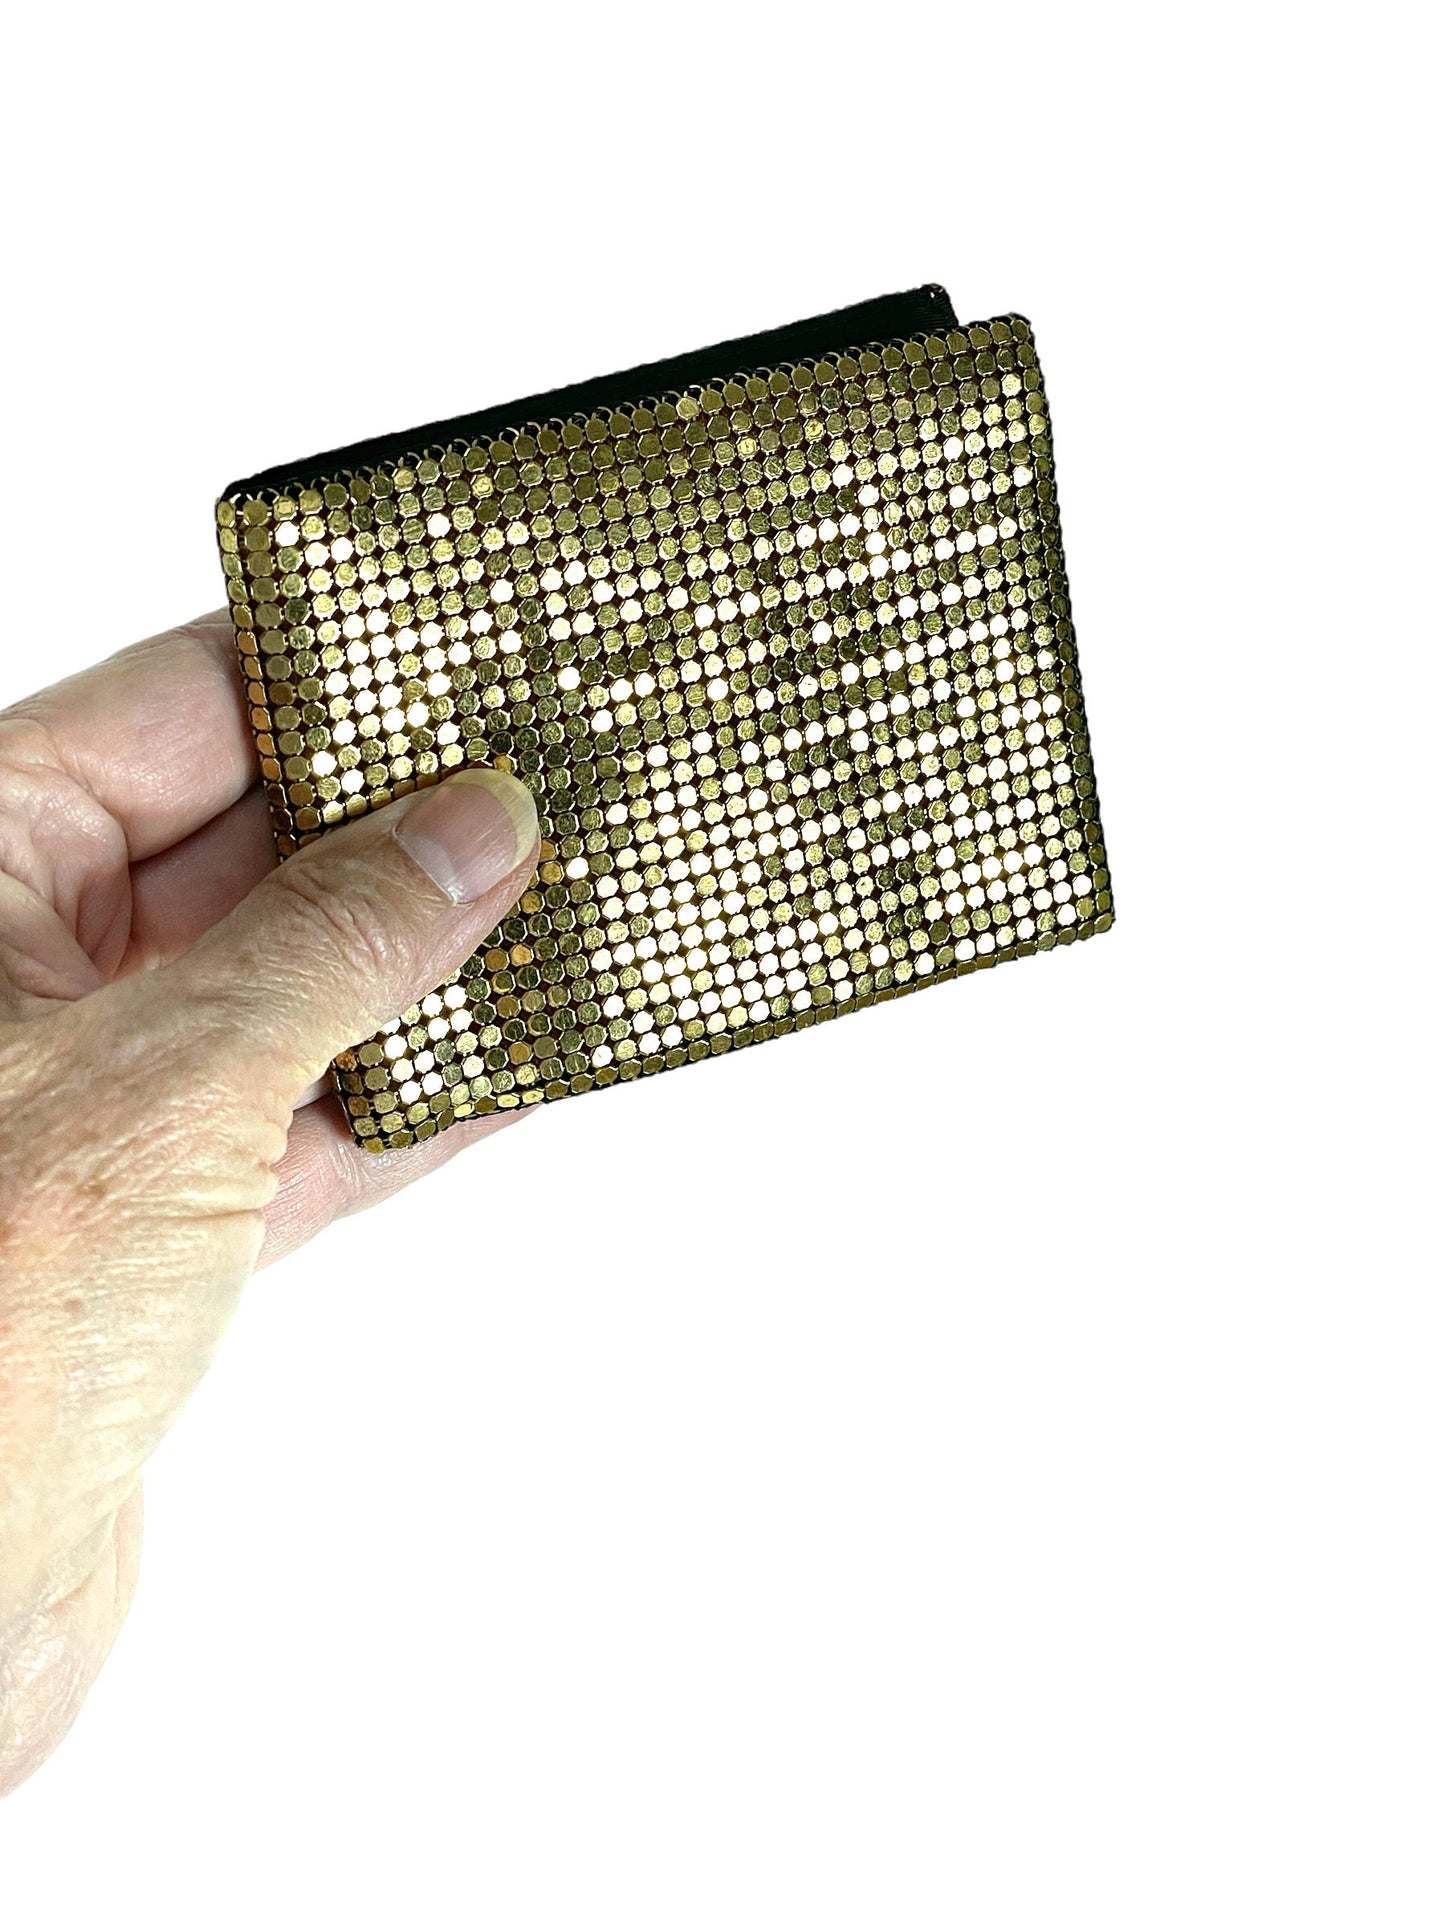 1950s shiny gold mesh wallet by Duramesh evening clutch